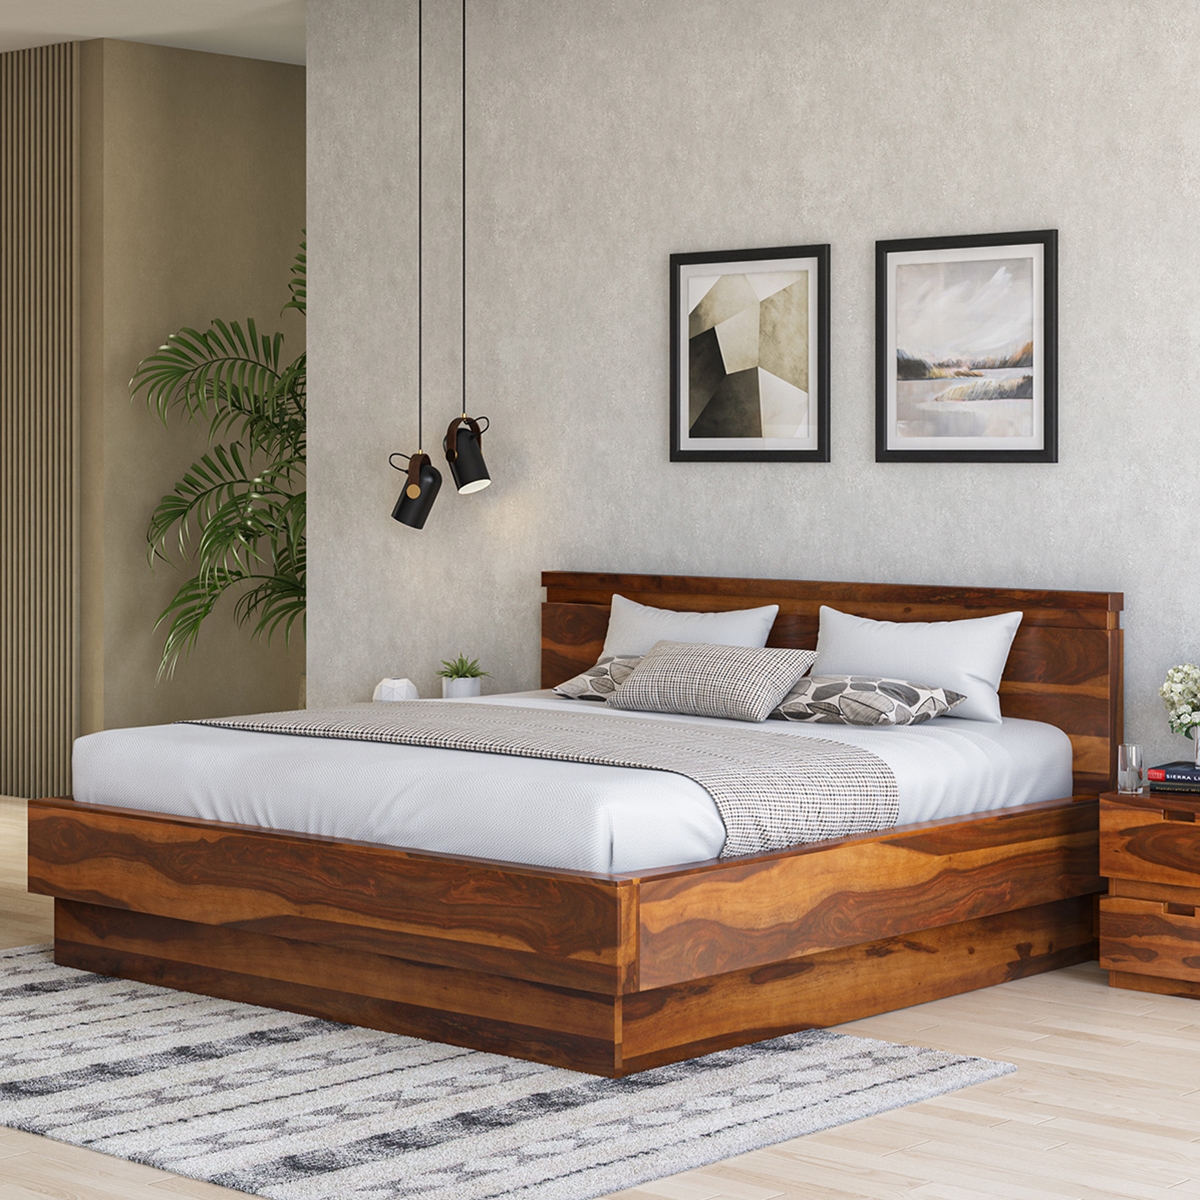 https://www.sierralivingconcepts.com/images/thumbs/0394887_modern-simplicity-solid-wood-custom-platform-bed-frame.jpeg